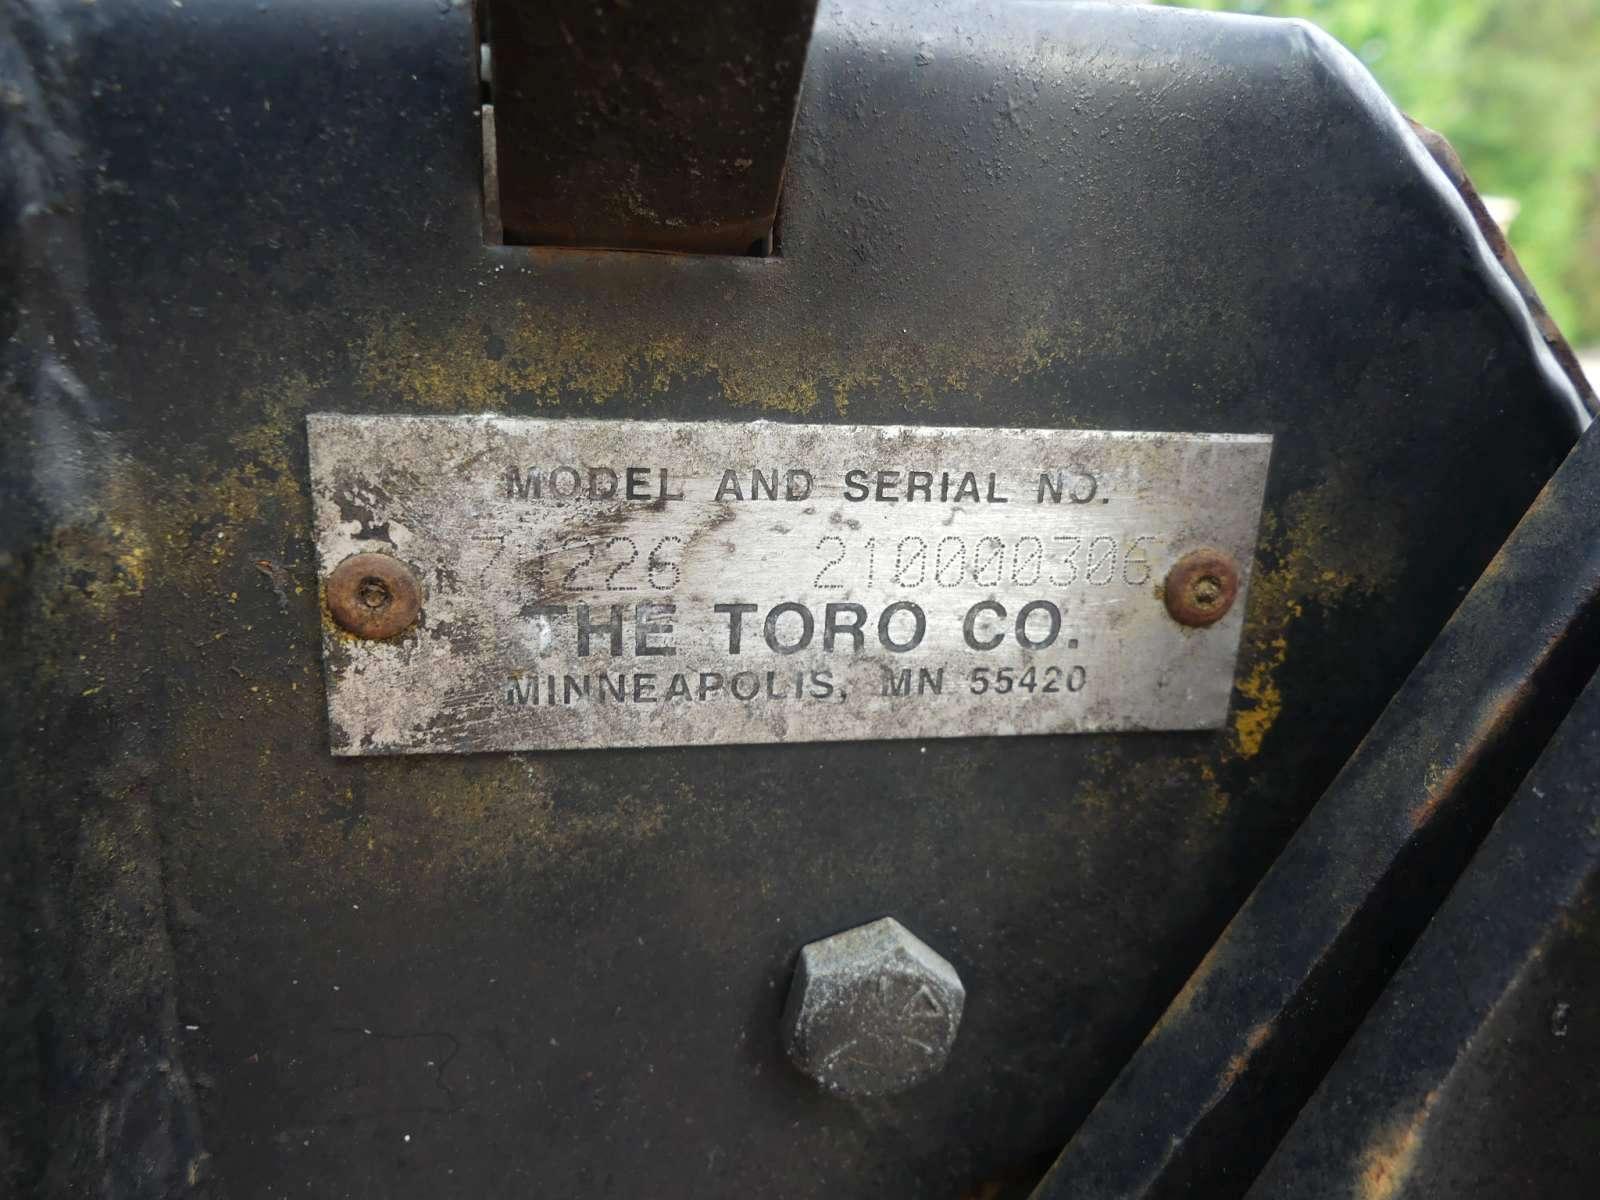 Toro Z Master Zero-turn Mower, s/n 210000306: Meter Shows 1149 hrs